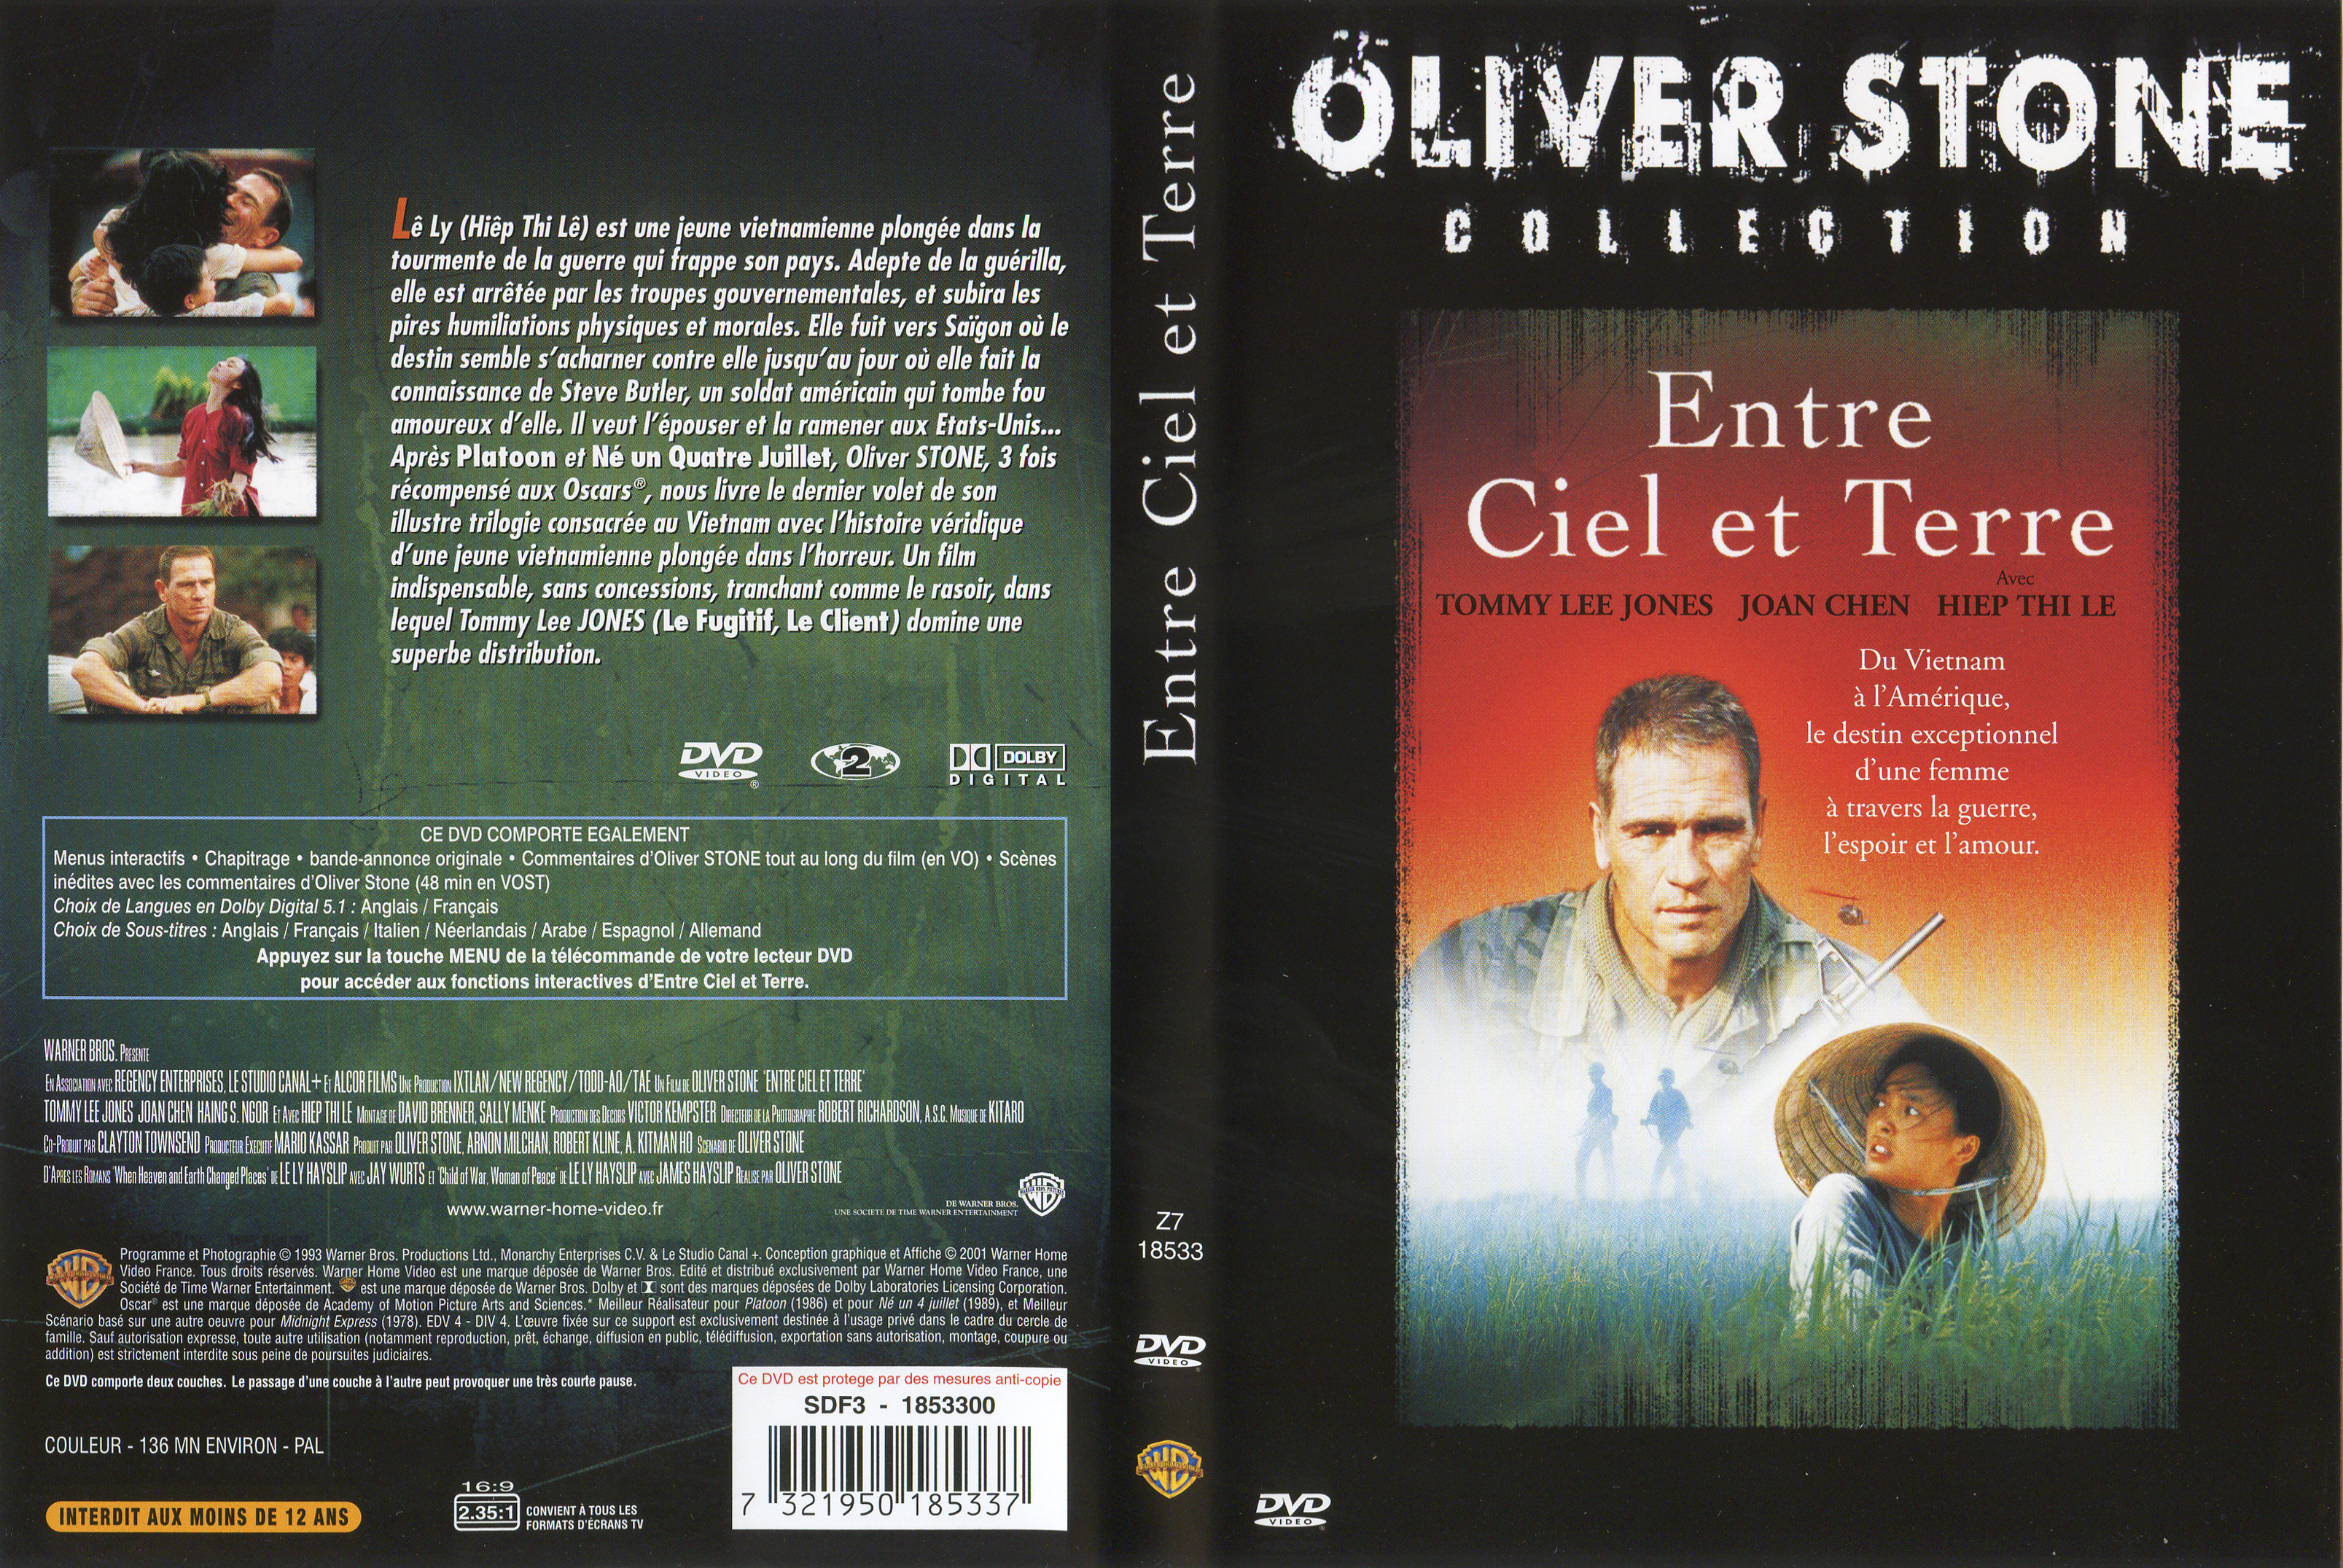 Jaquette DVD Entre ciel et terre v3